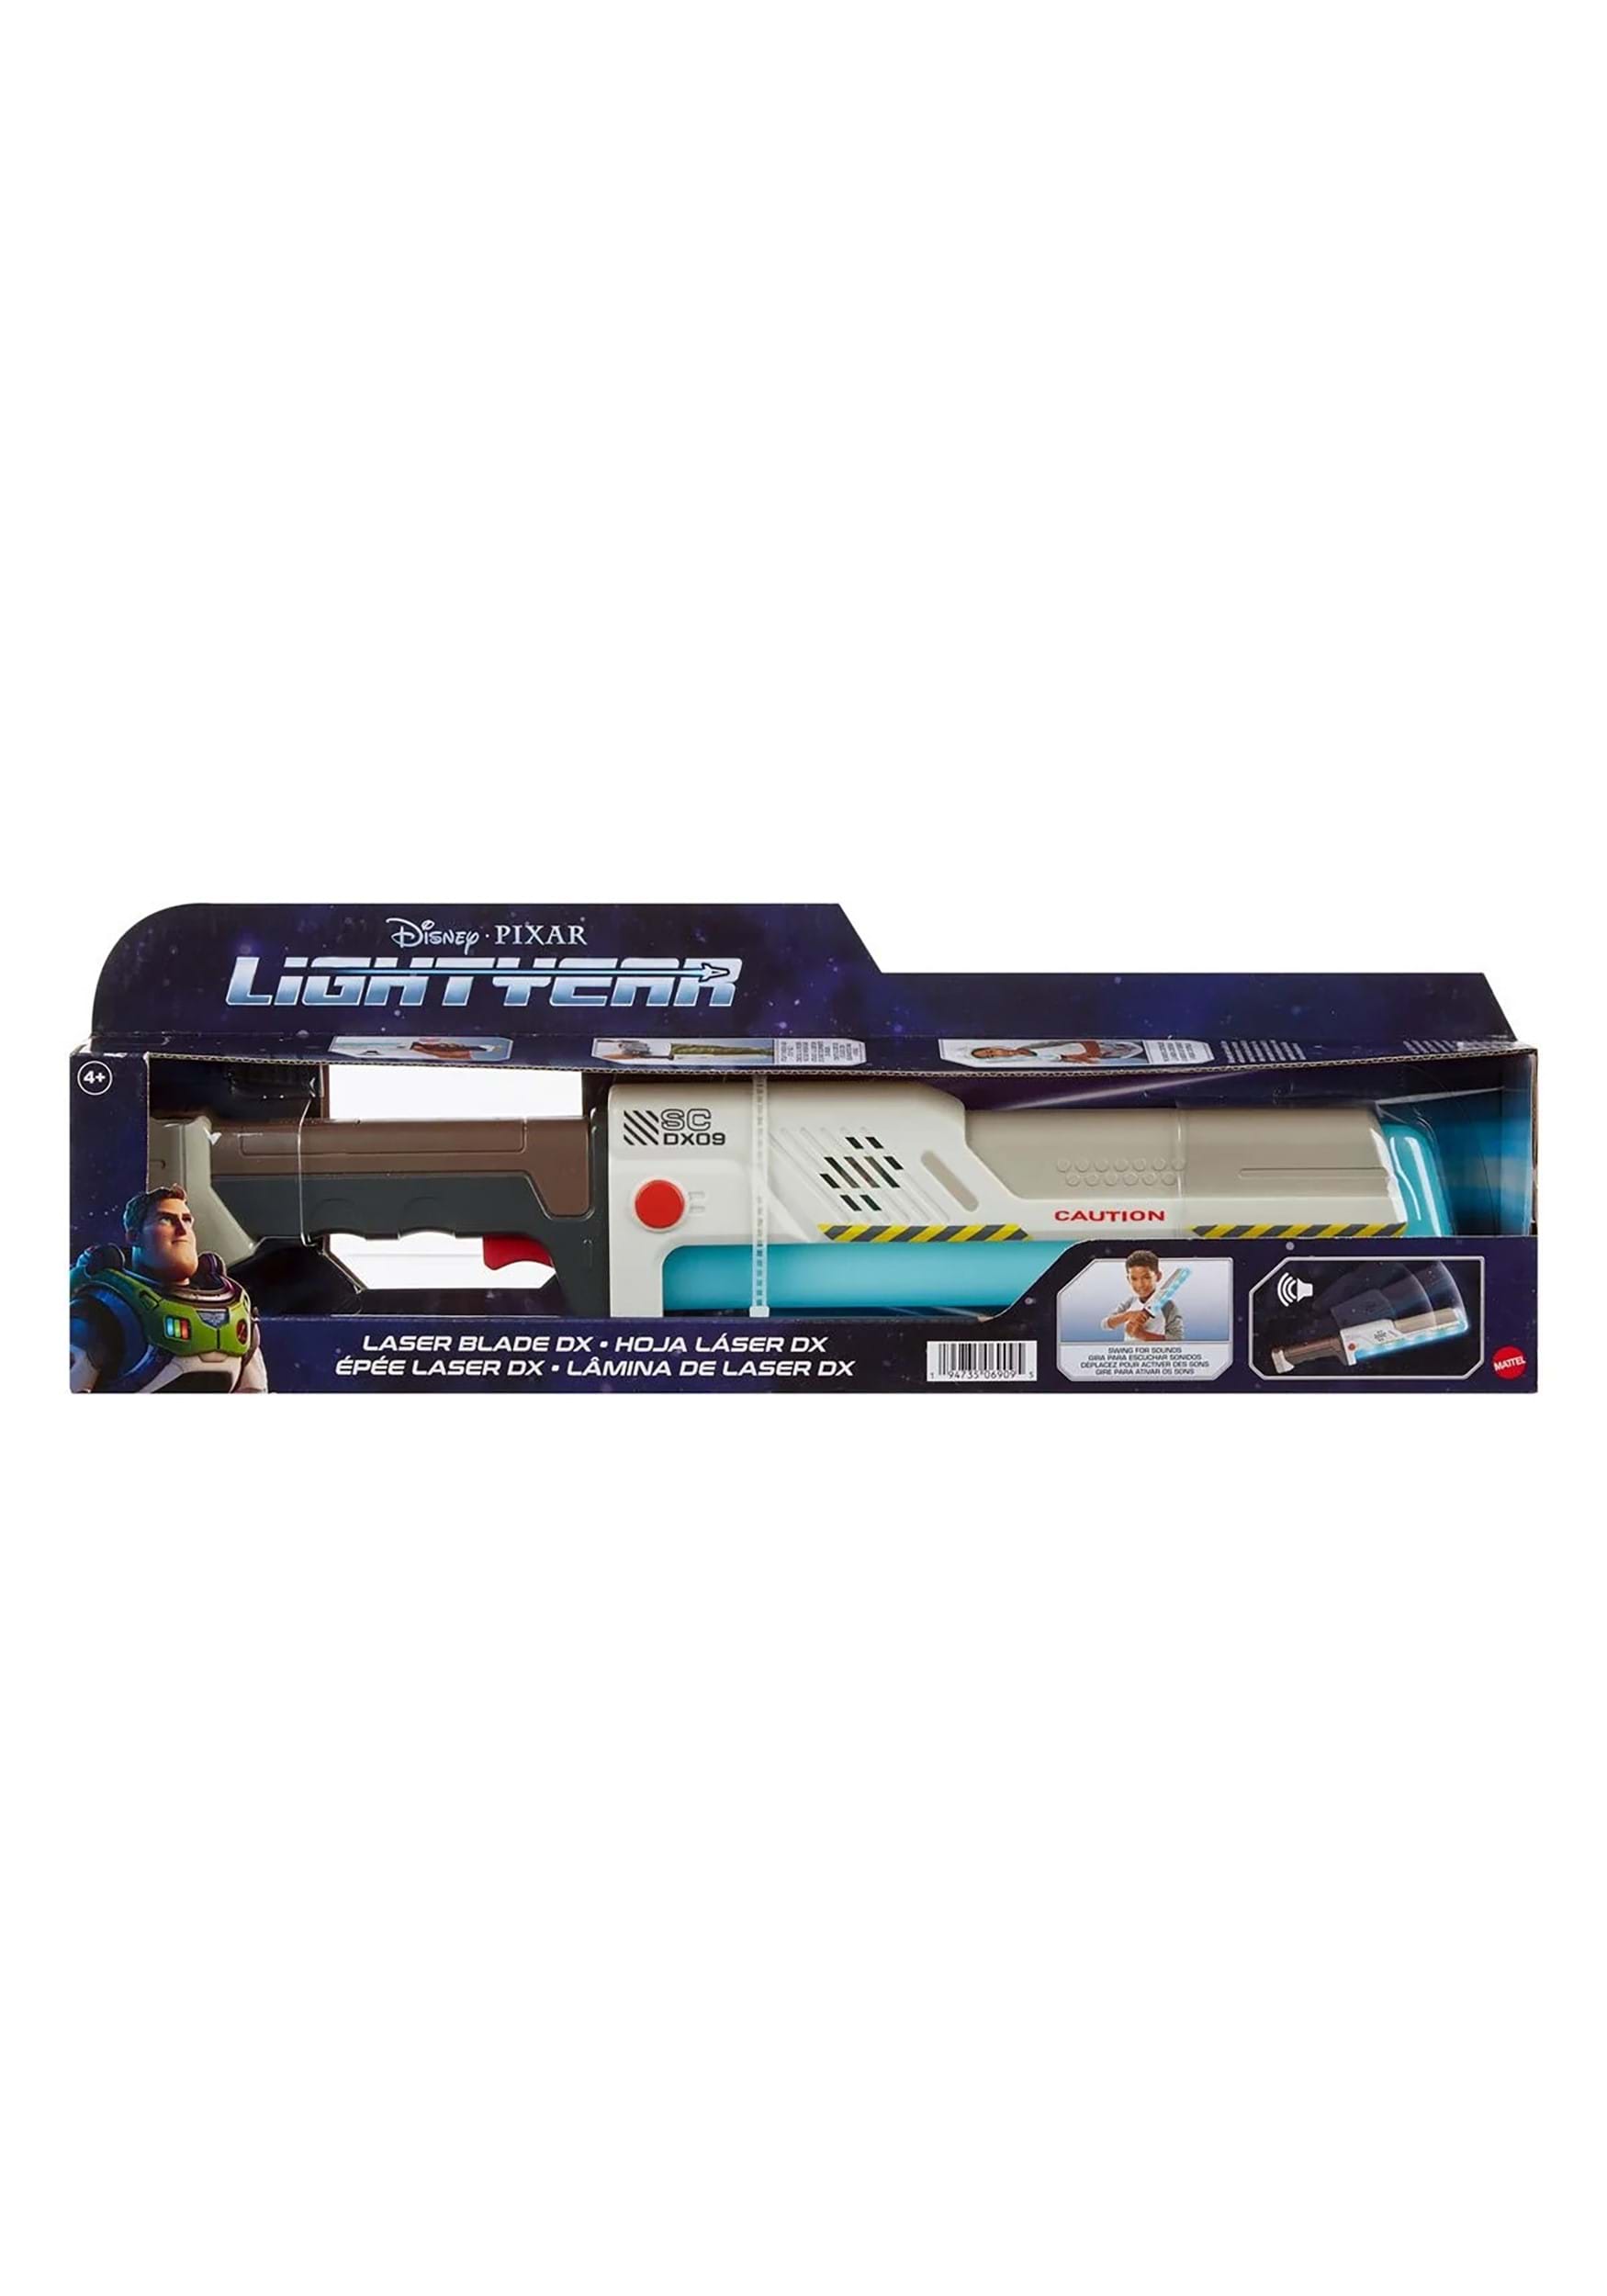 Disney Pixar Lightyear Laser Blade DX For Kids